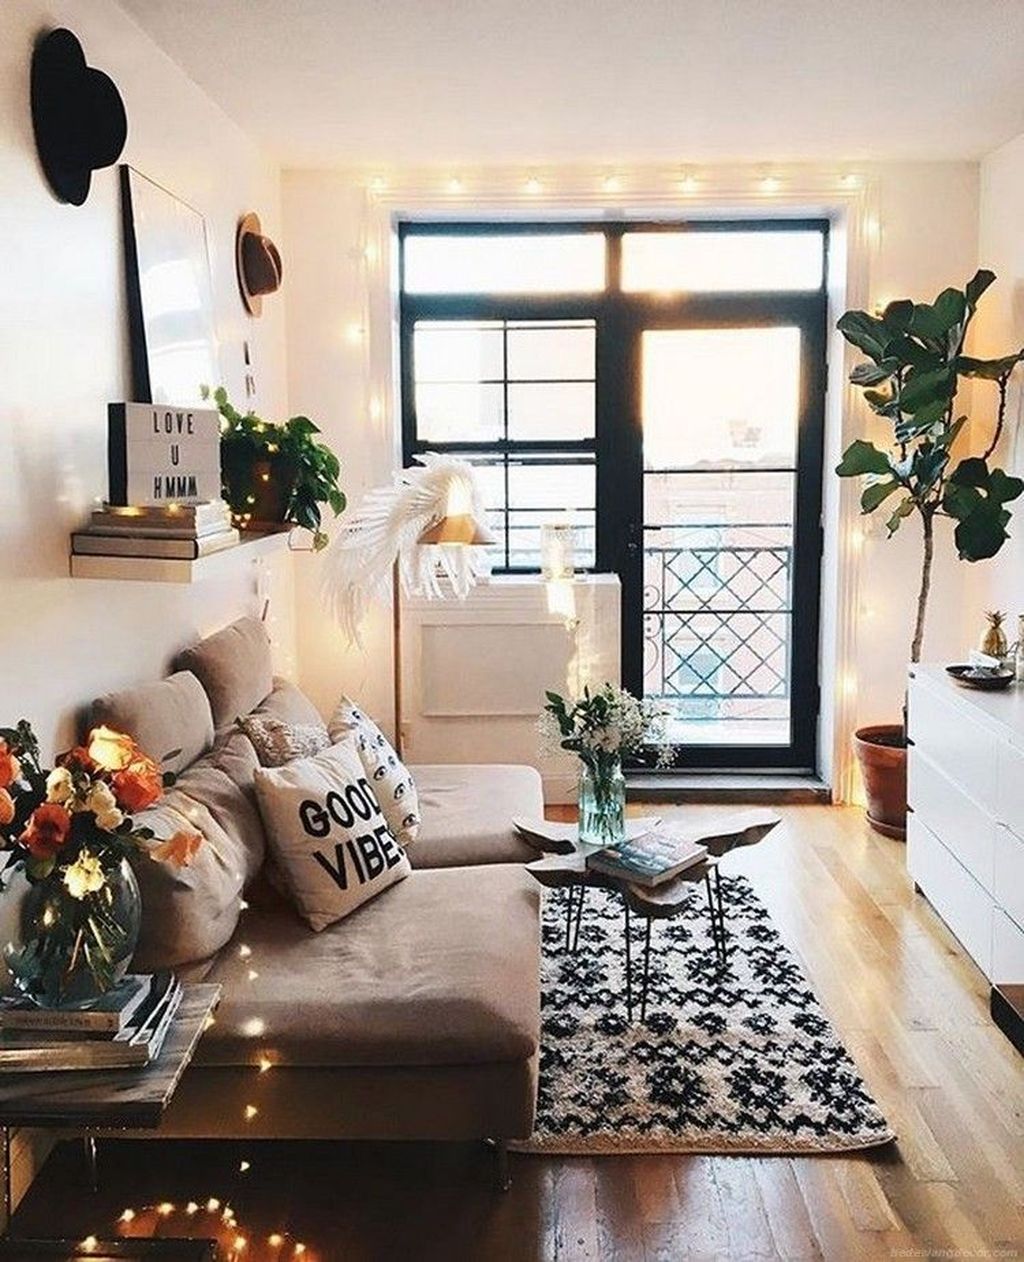 34 The Best Rustic Bohemian Living Room Decor Ideas – Homyhomee Regarding Cozy Castle Boho Living Room Tables (View 4 of 20)